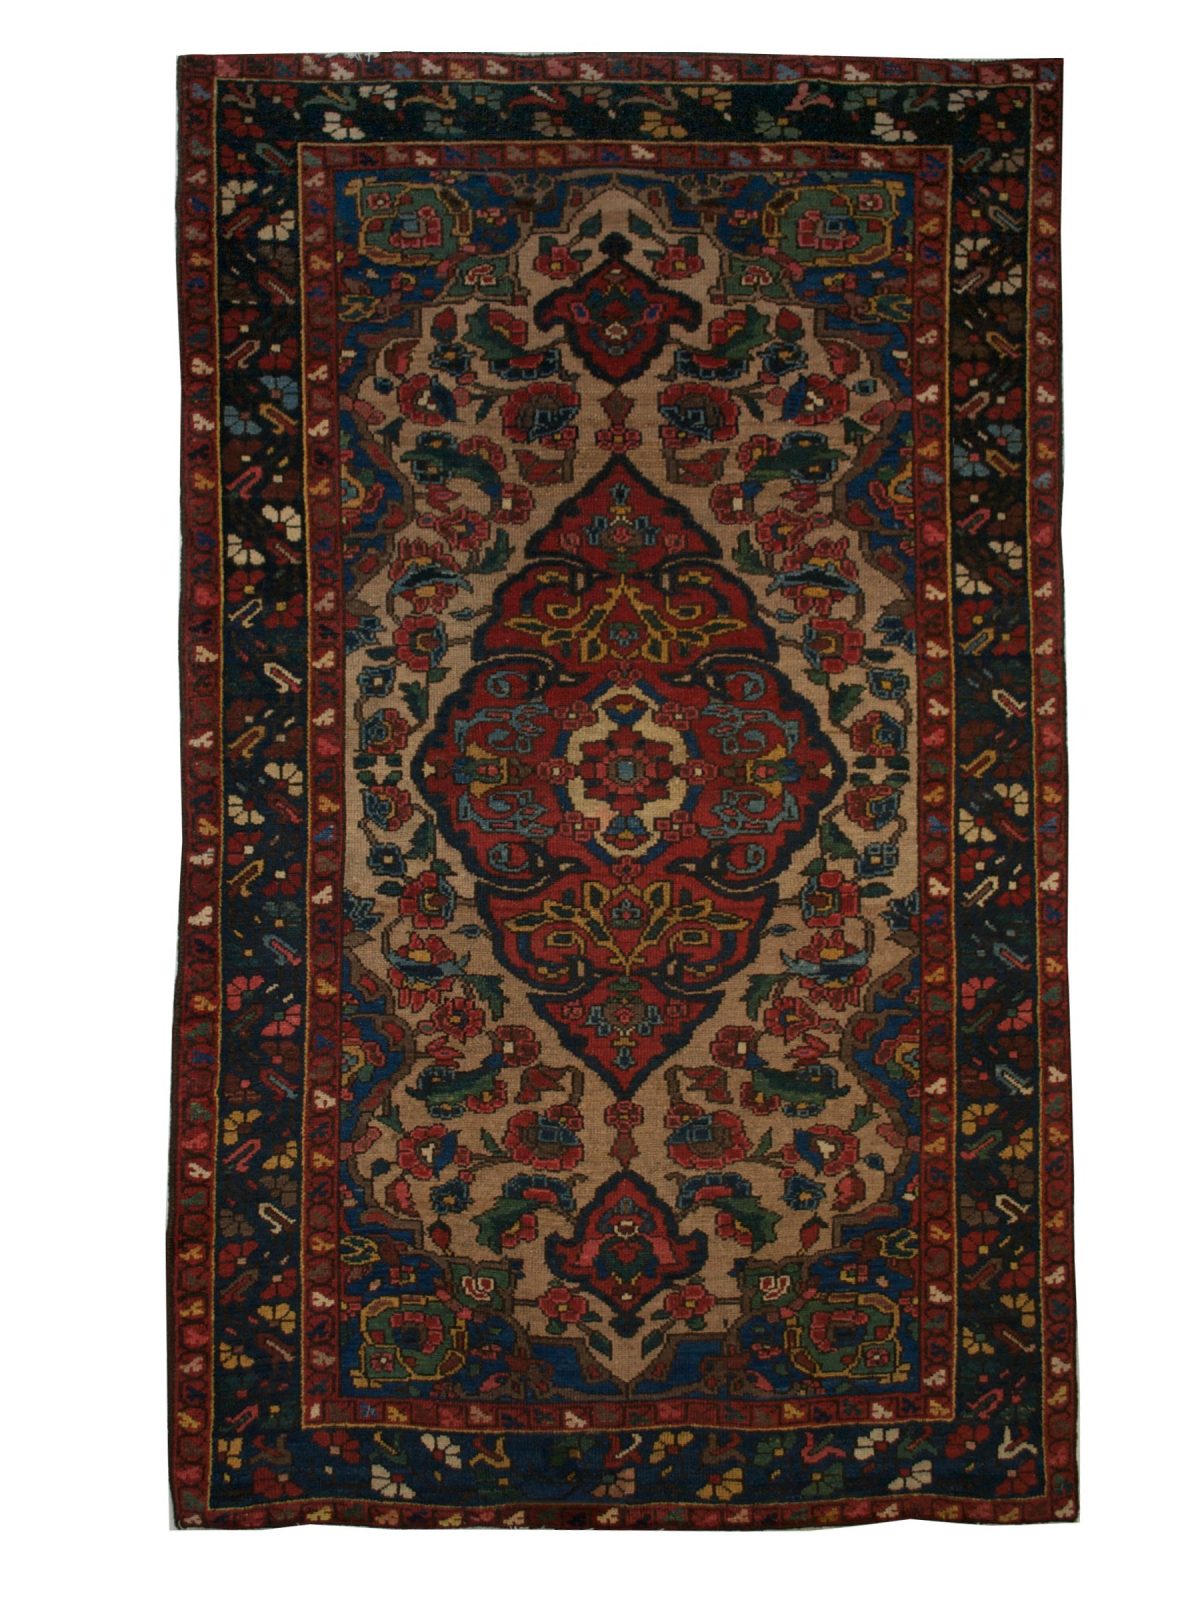 Antique Persian Bakhtiari 3' 11" x 6' 7" Handmade Wool Area Rug - Shabahang Royal Carpet